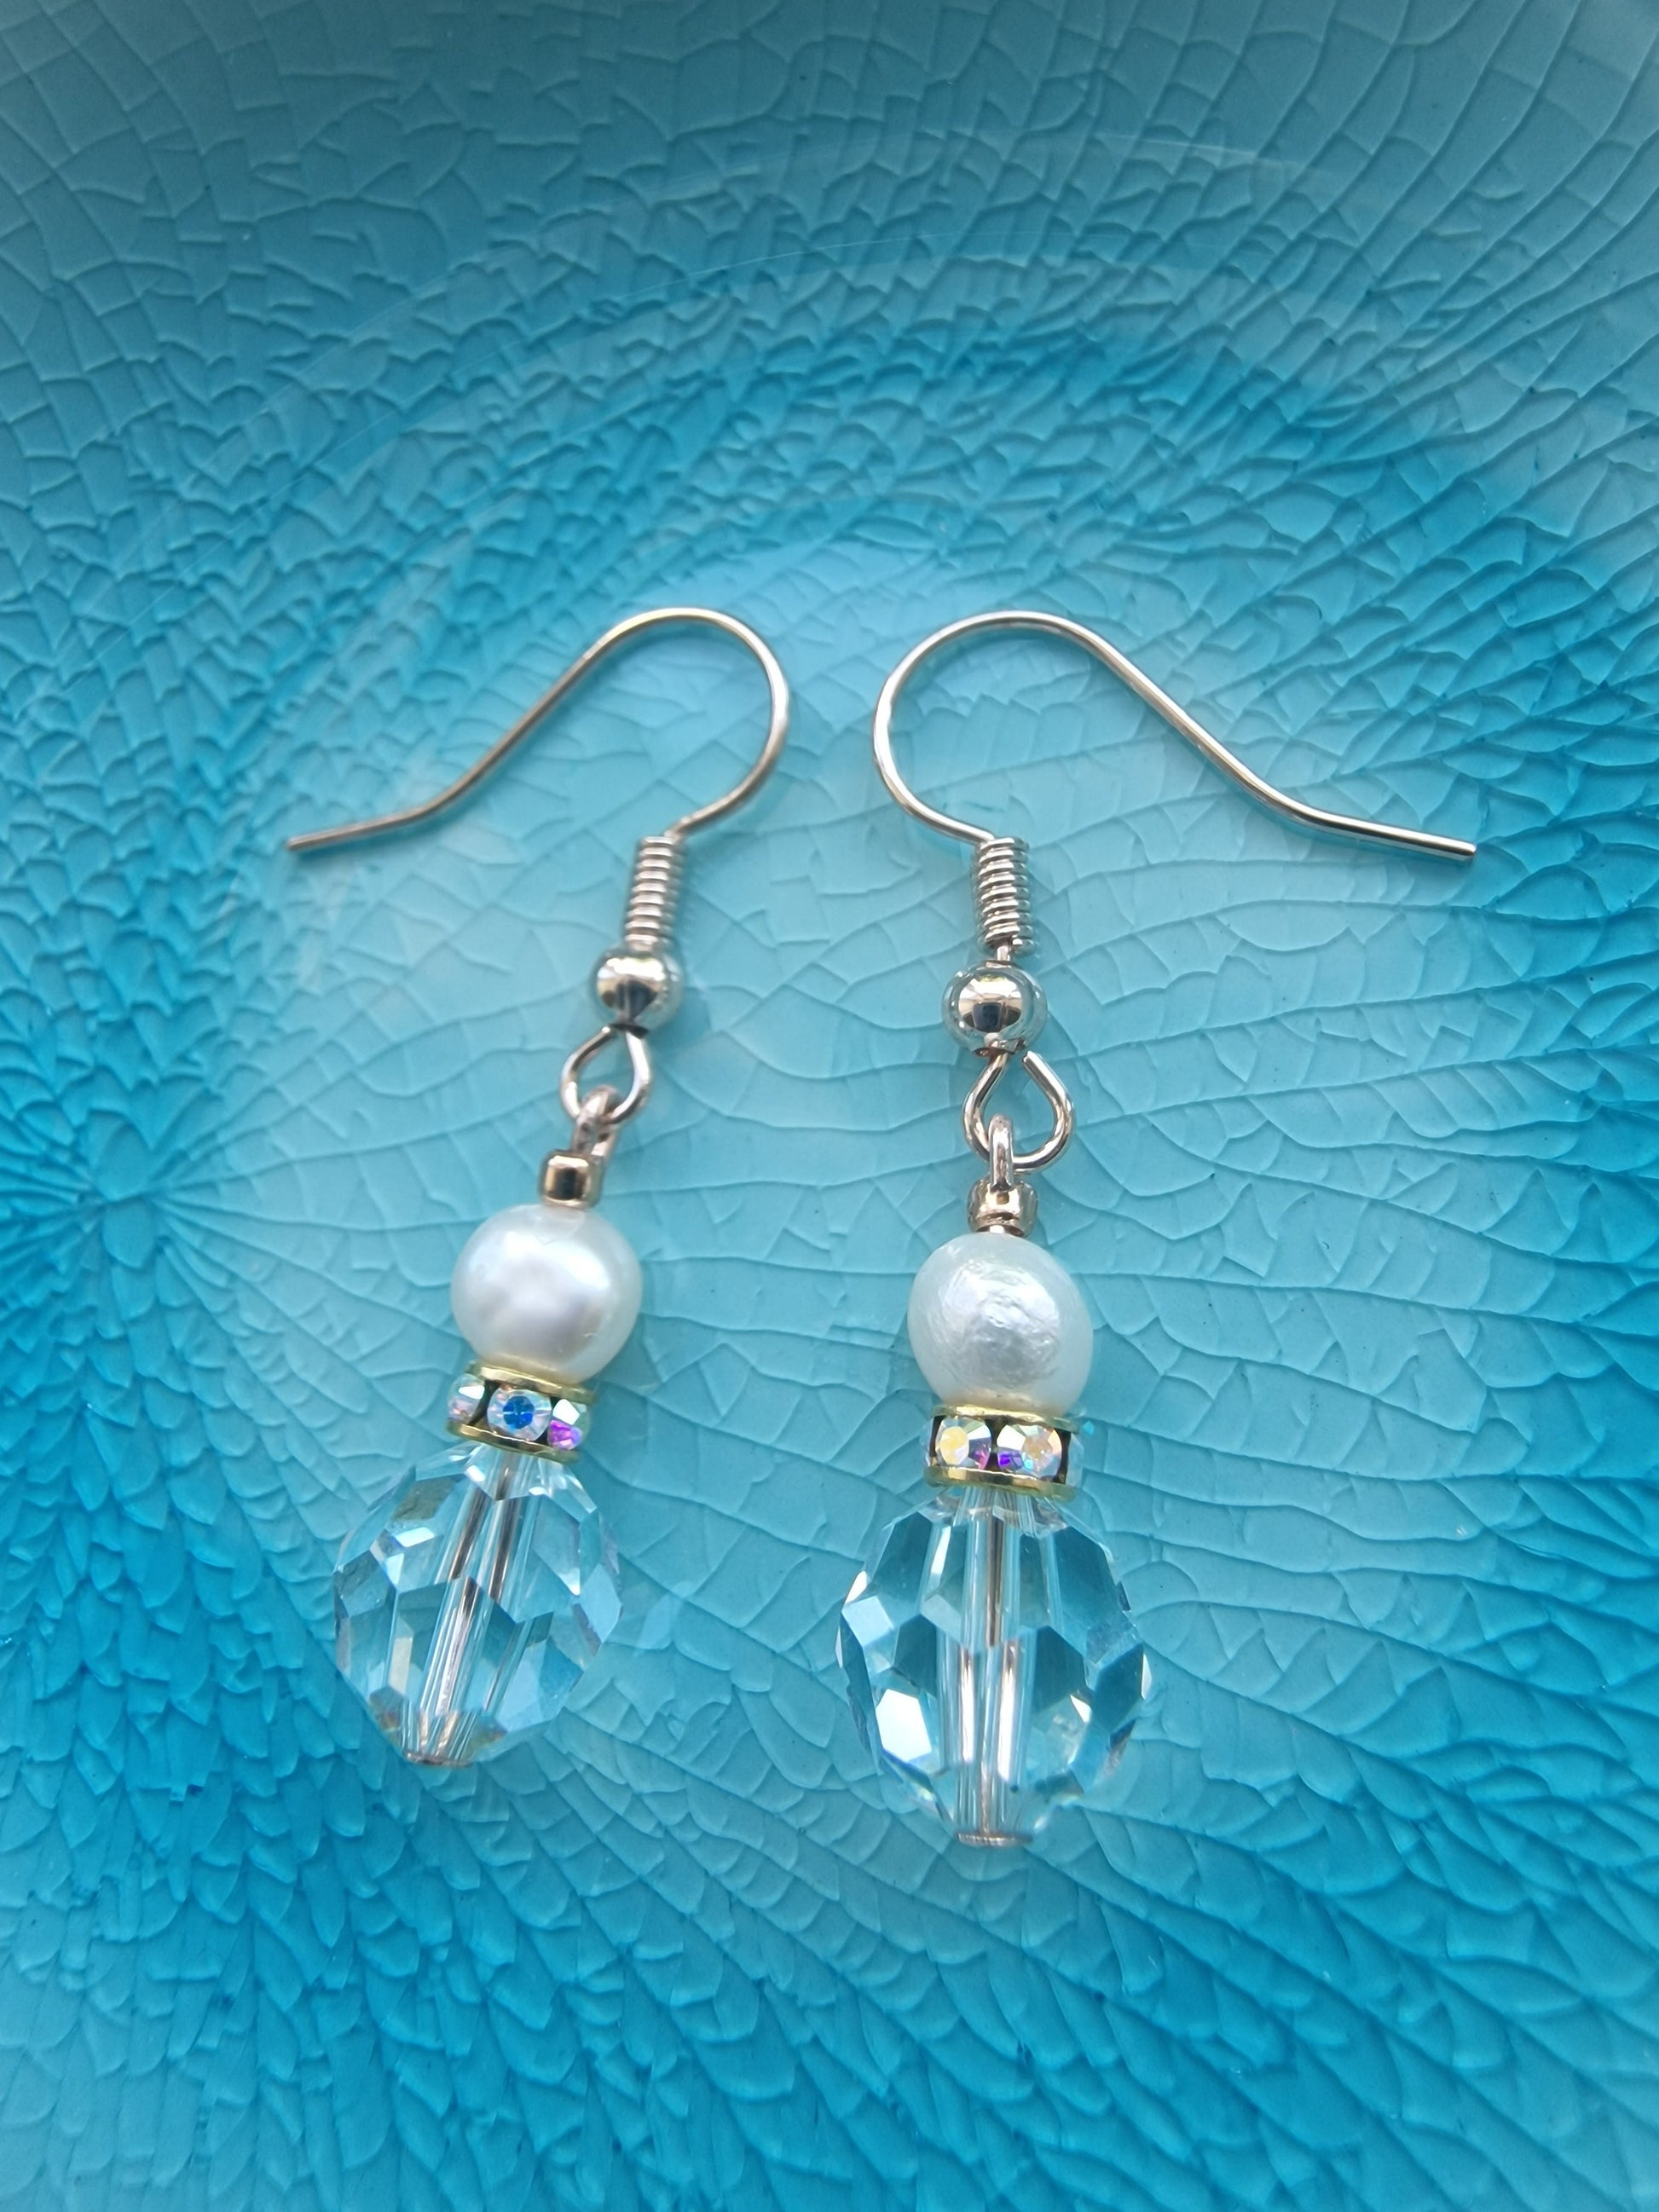 Light Azure Swarovski Bead & Pearl Earrings - design-eye-gallery